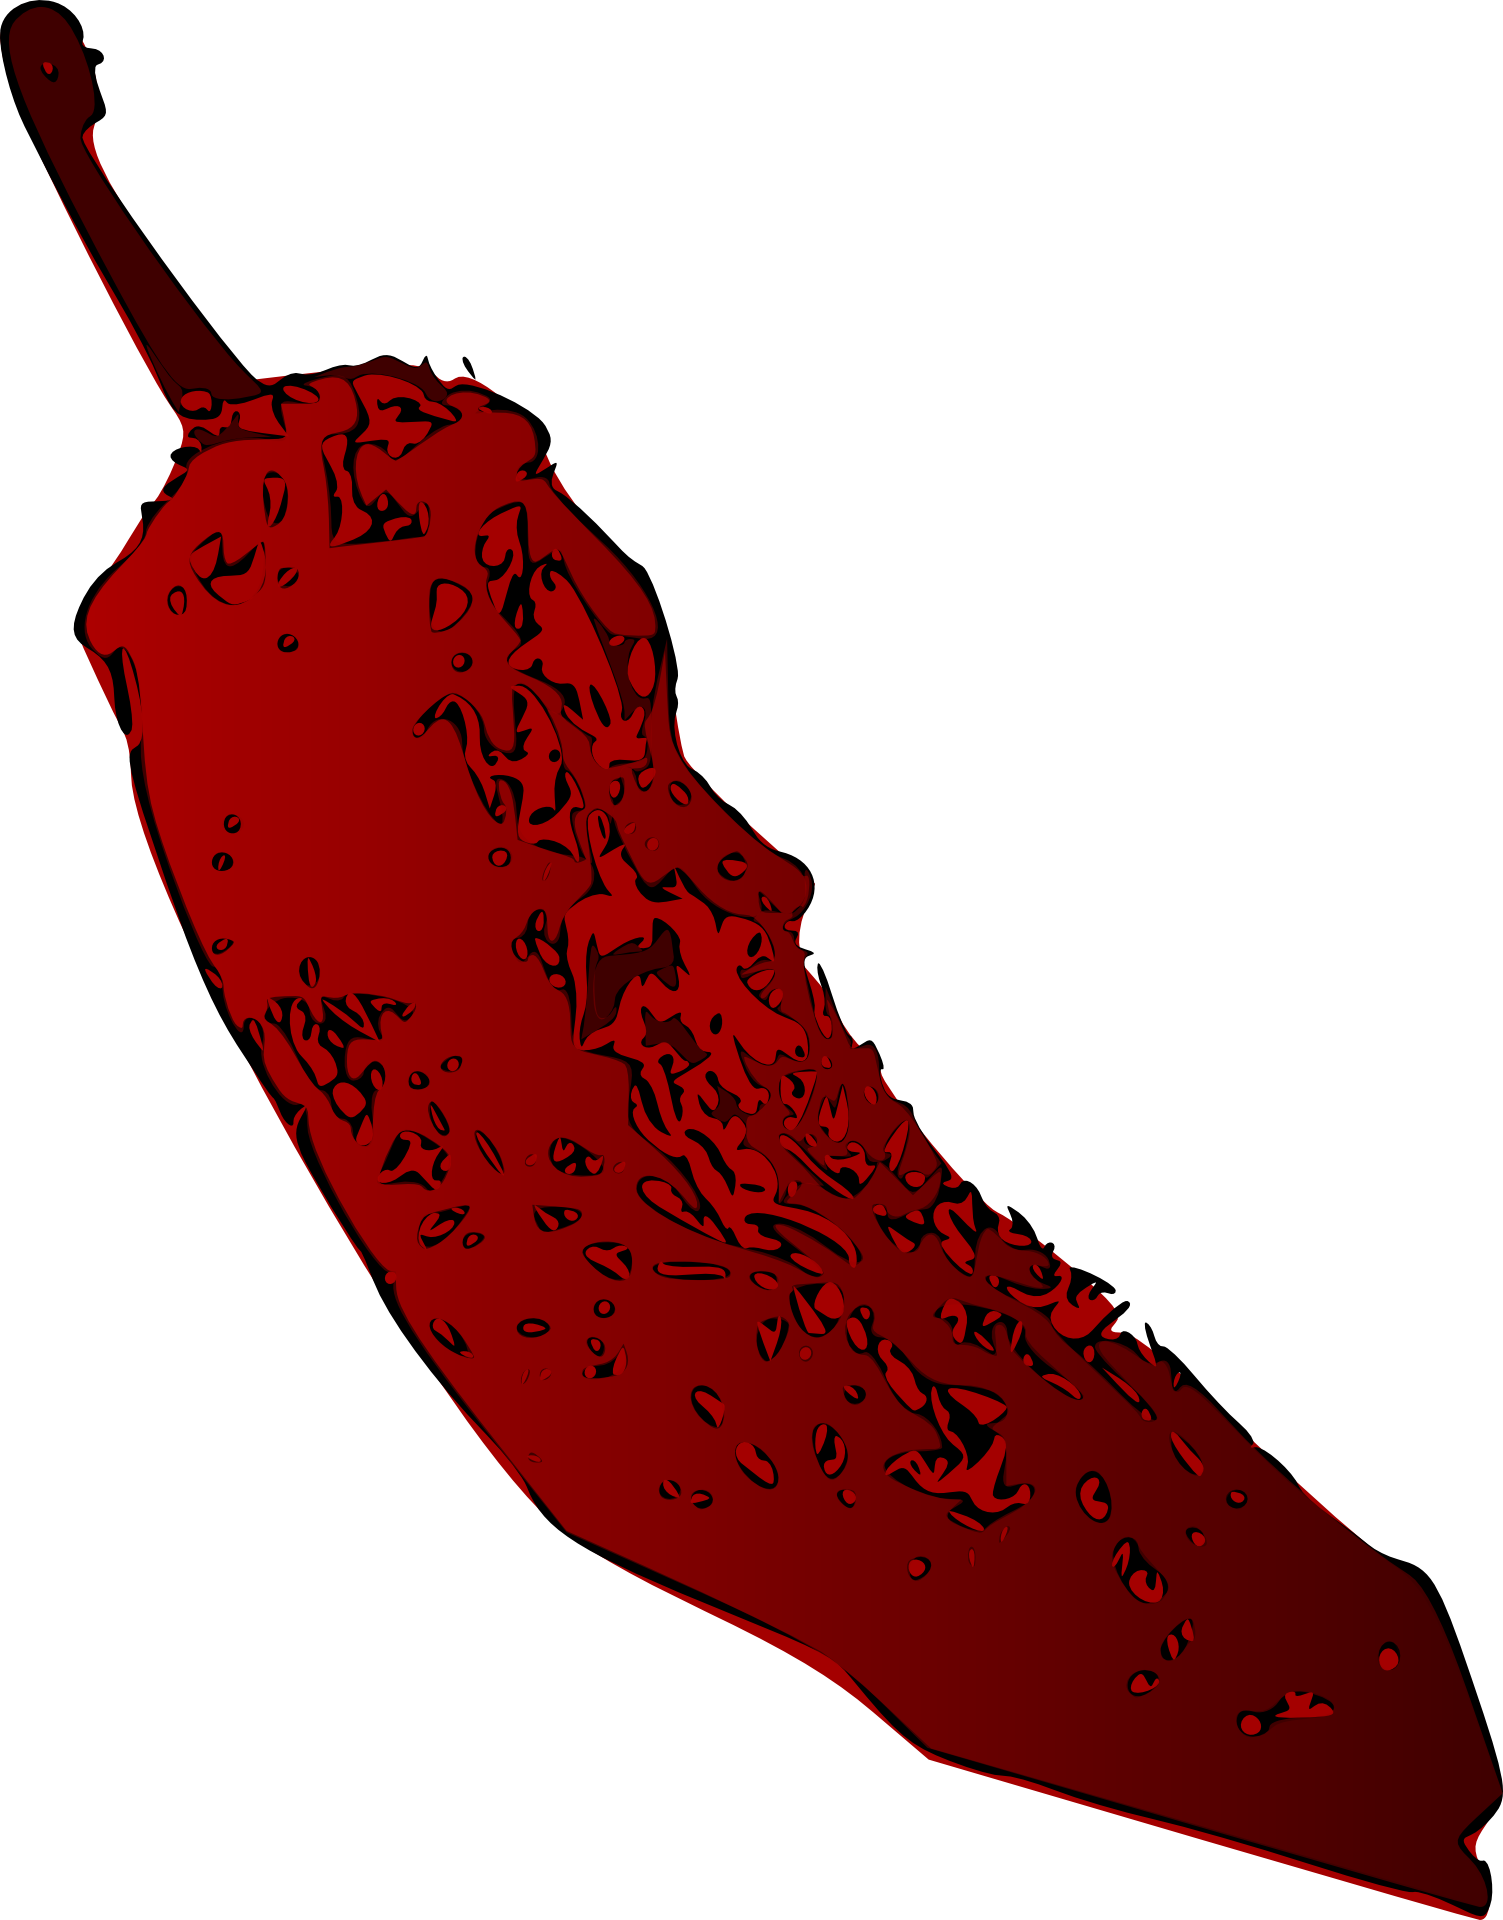 Chili Pepper (1503x1920)